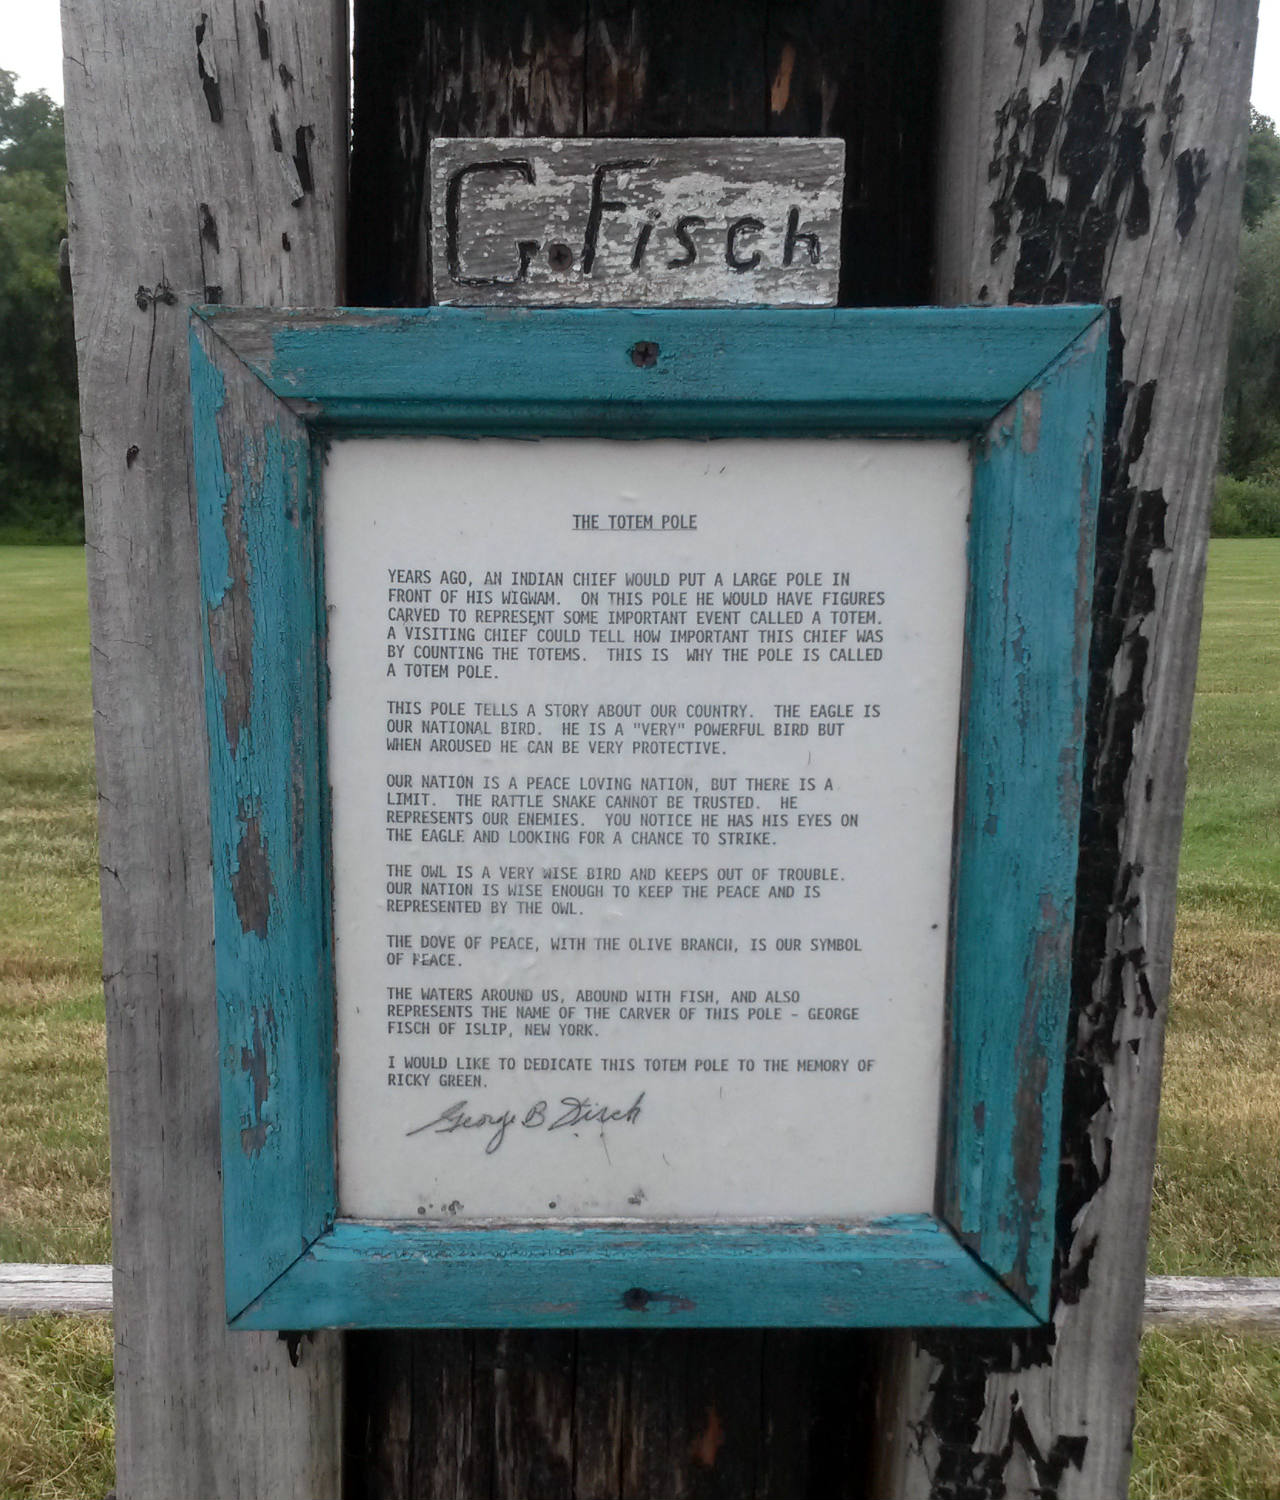 Totem Pole Plaque in Ricky Greene Memorial Park in Conesus